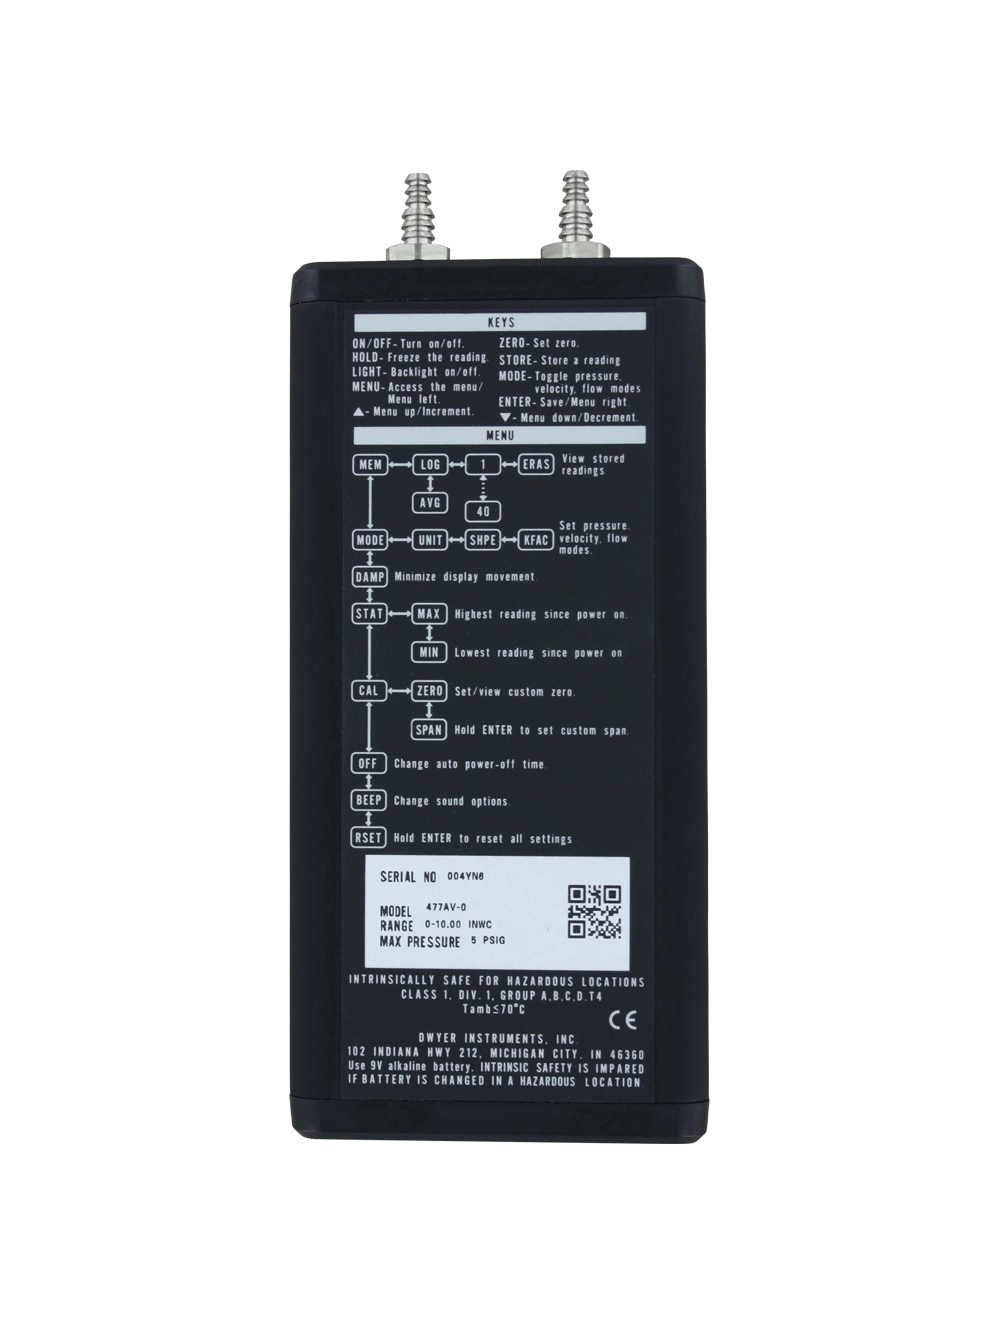 Series 477AV Handheld Digital Manometer | Dwyer Instruments